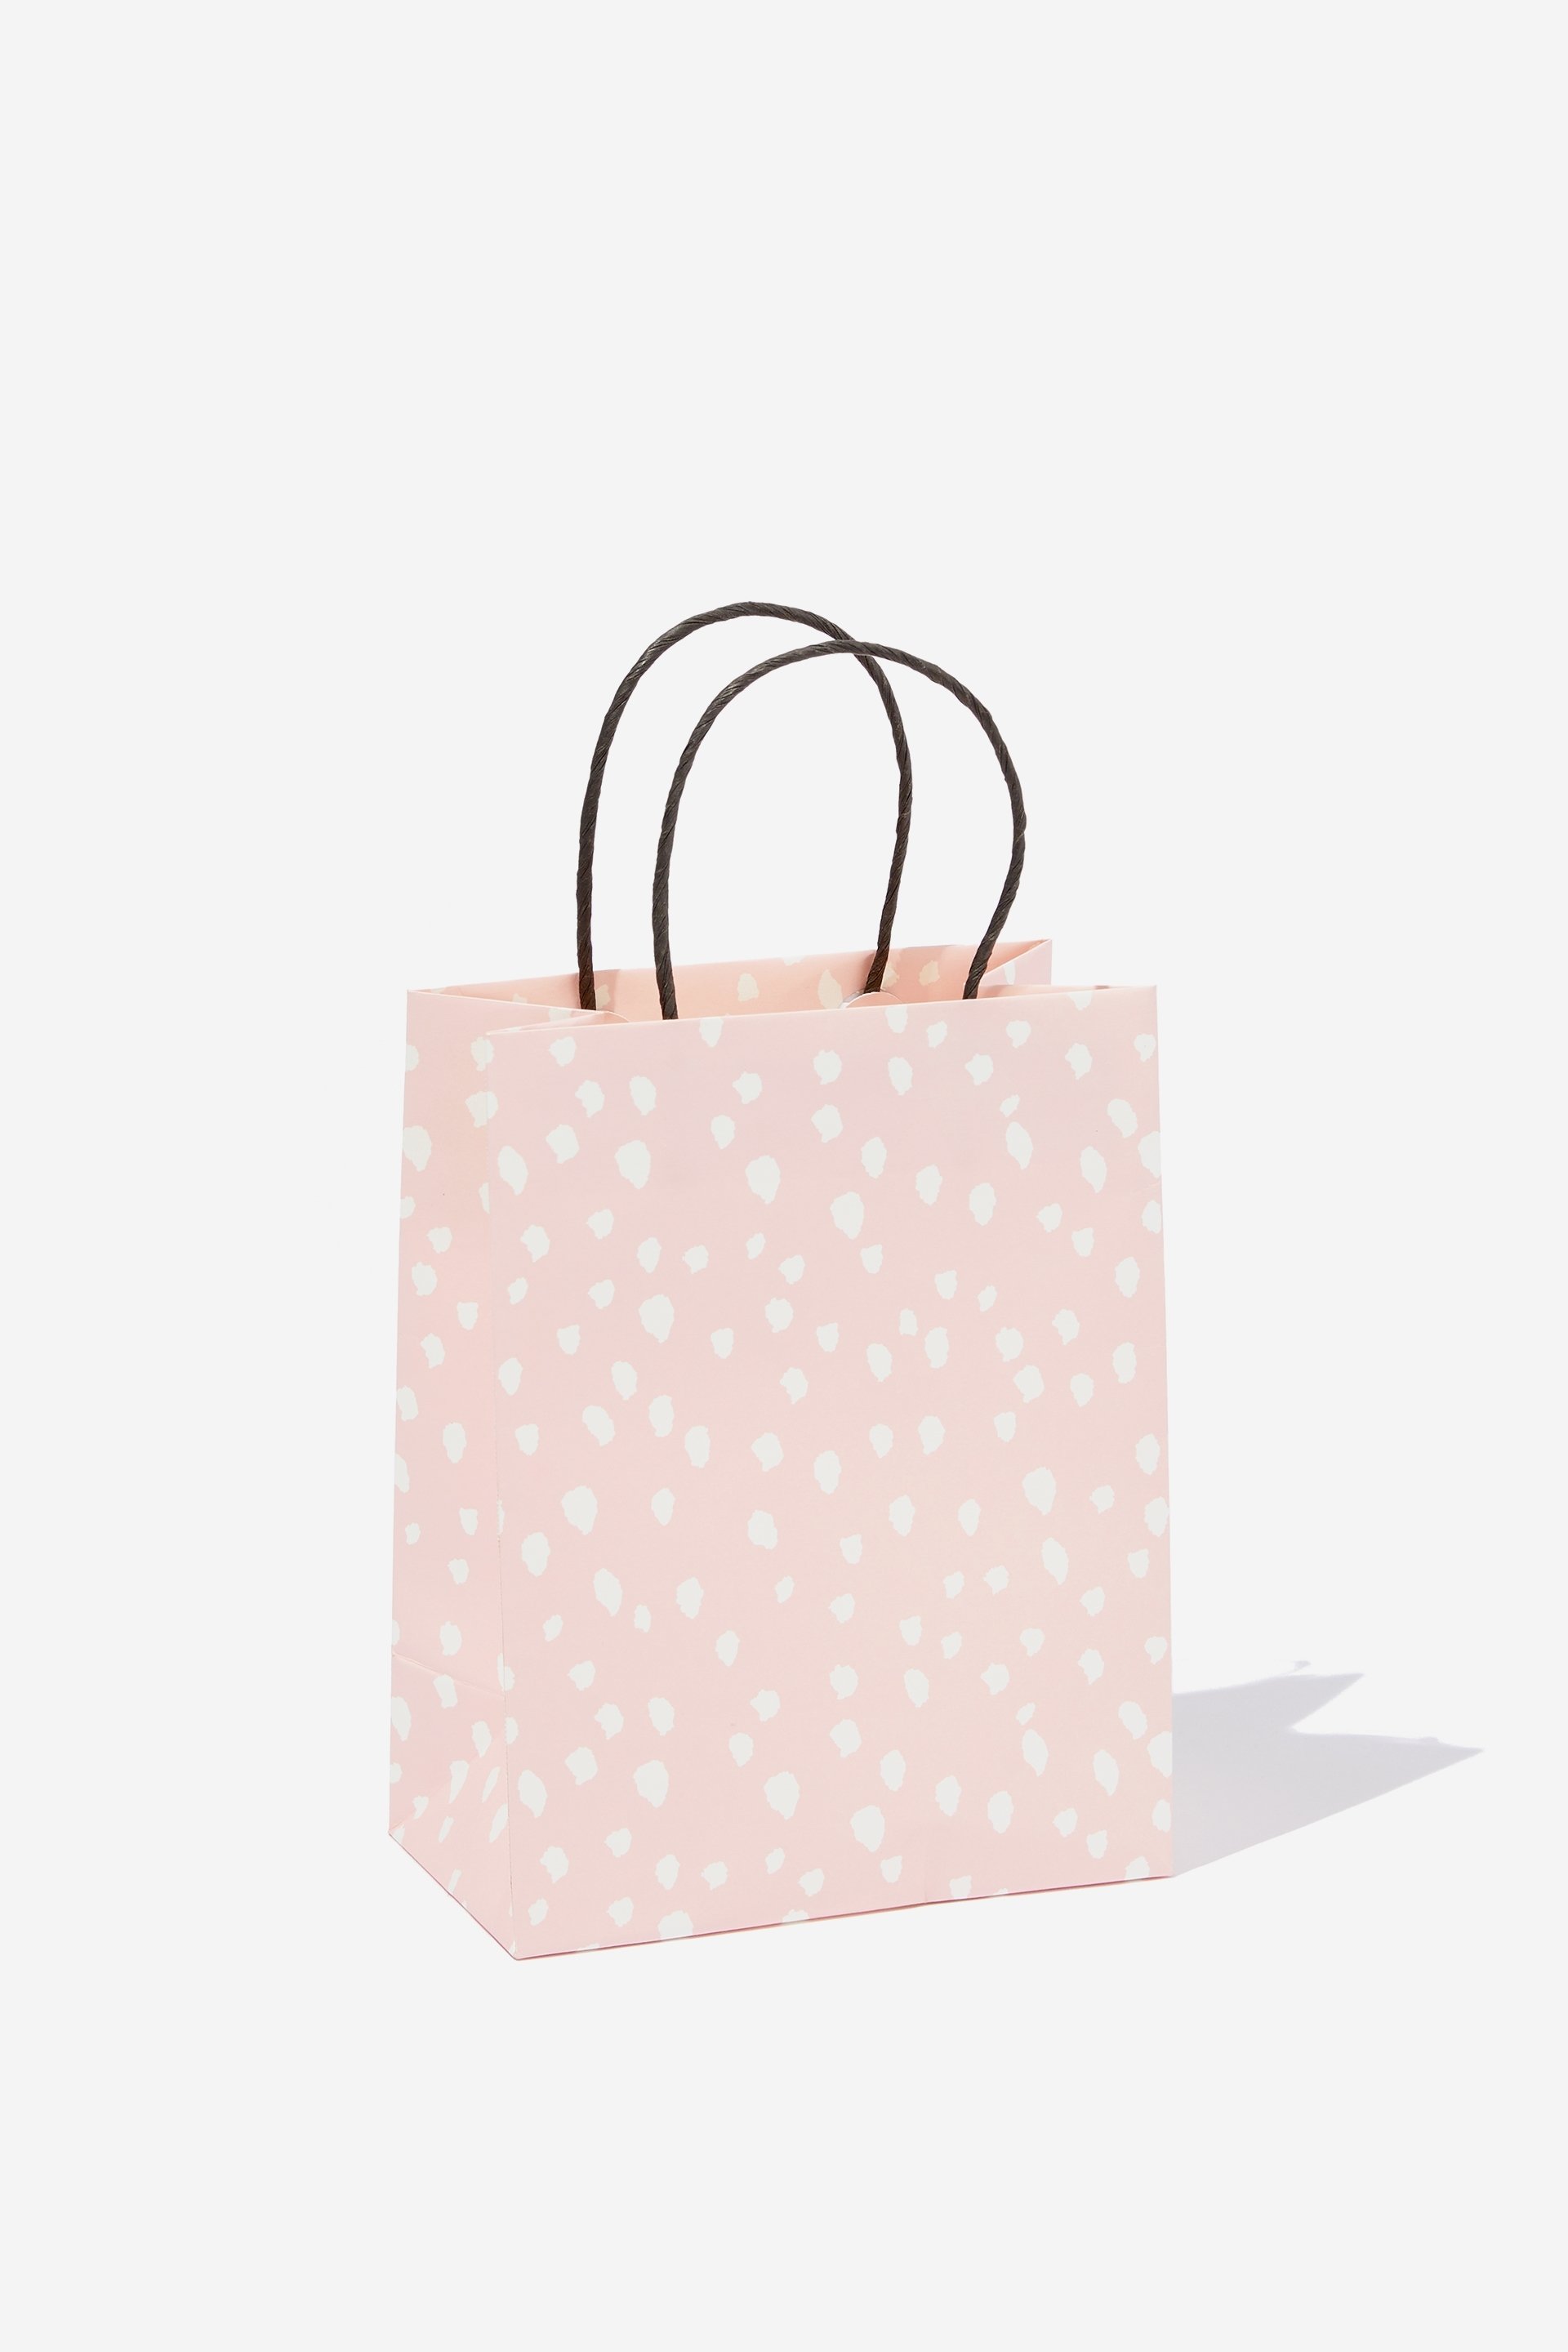 Typo - Get Stuffed Gift Bag - Small - Spots ballet blush